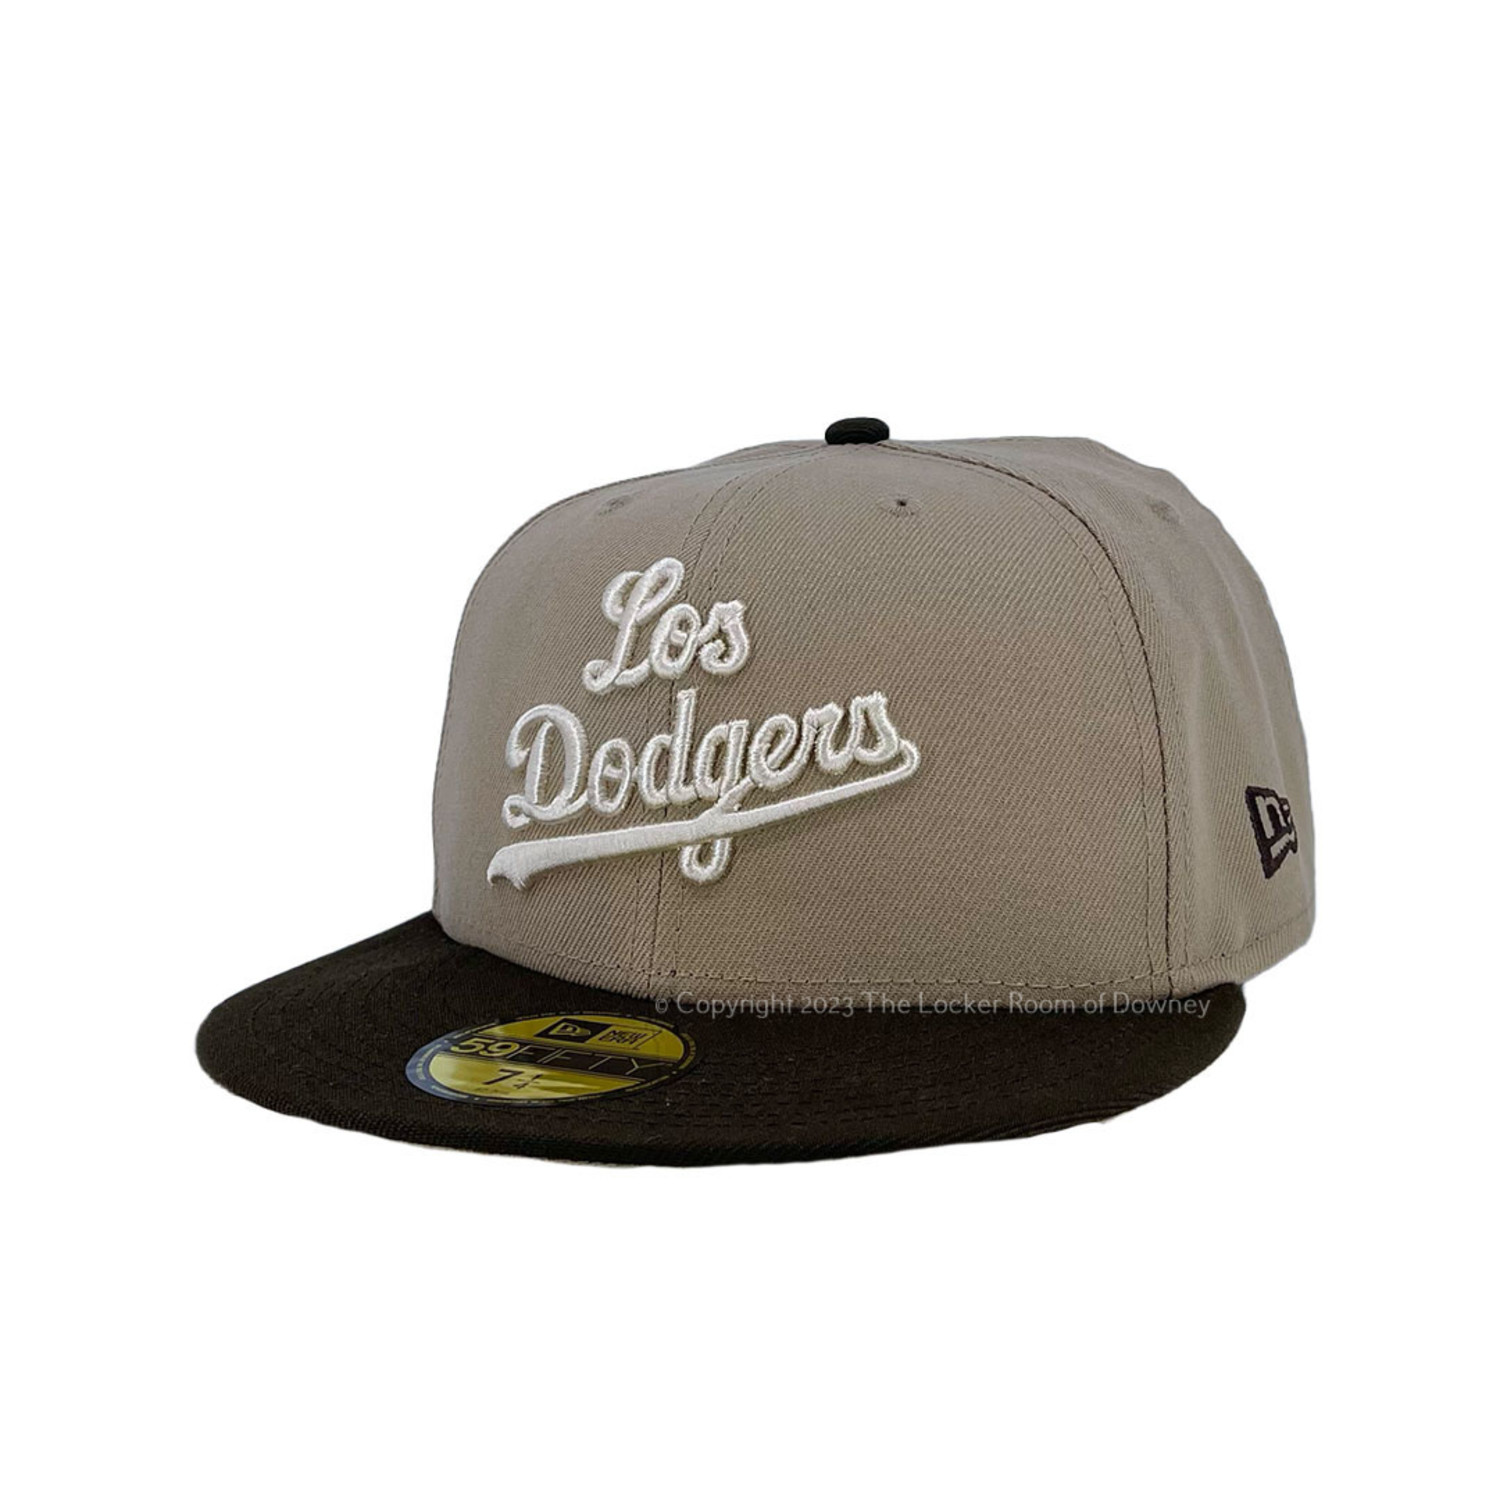 Los Angeles Dodgers - The Locker Room of Downey